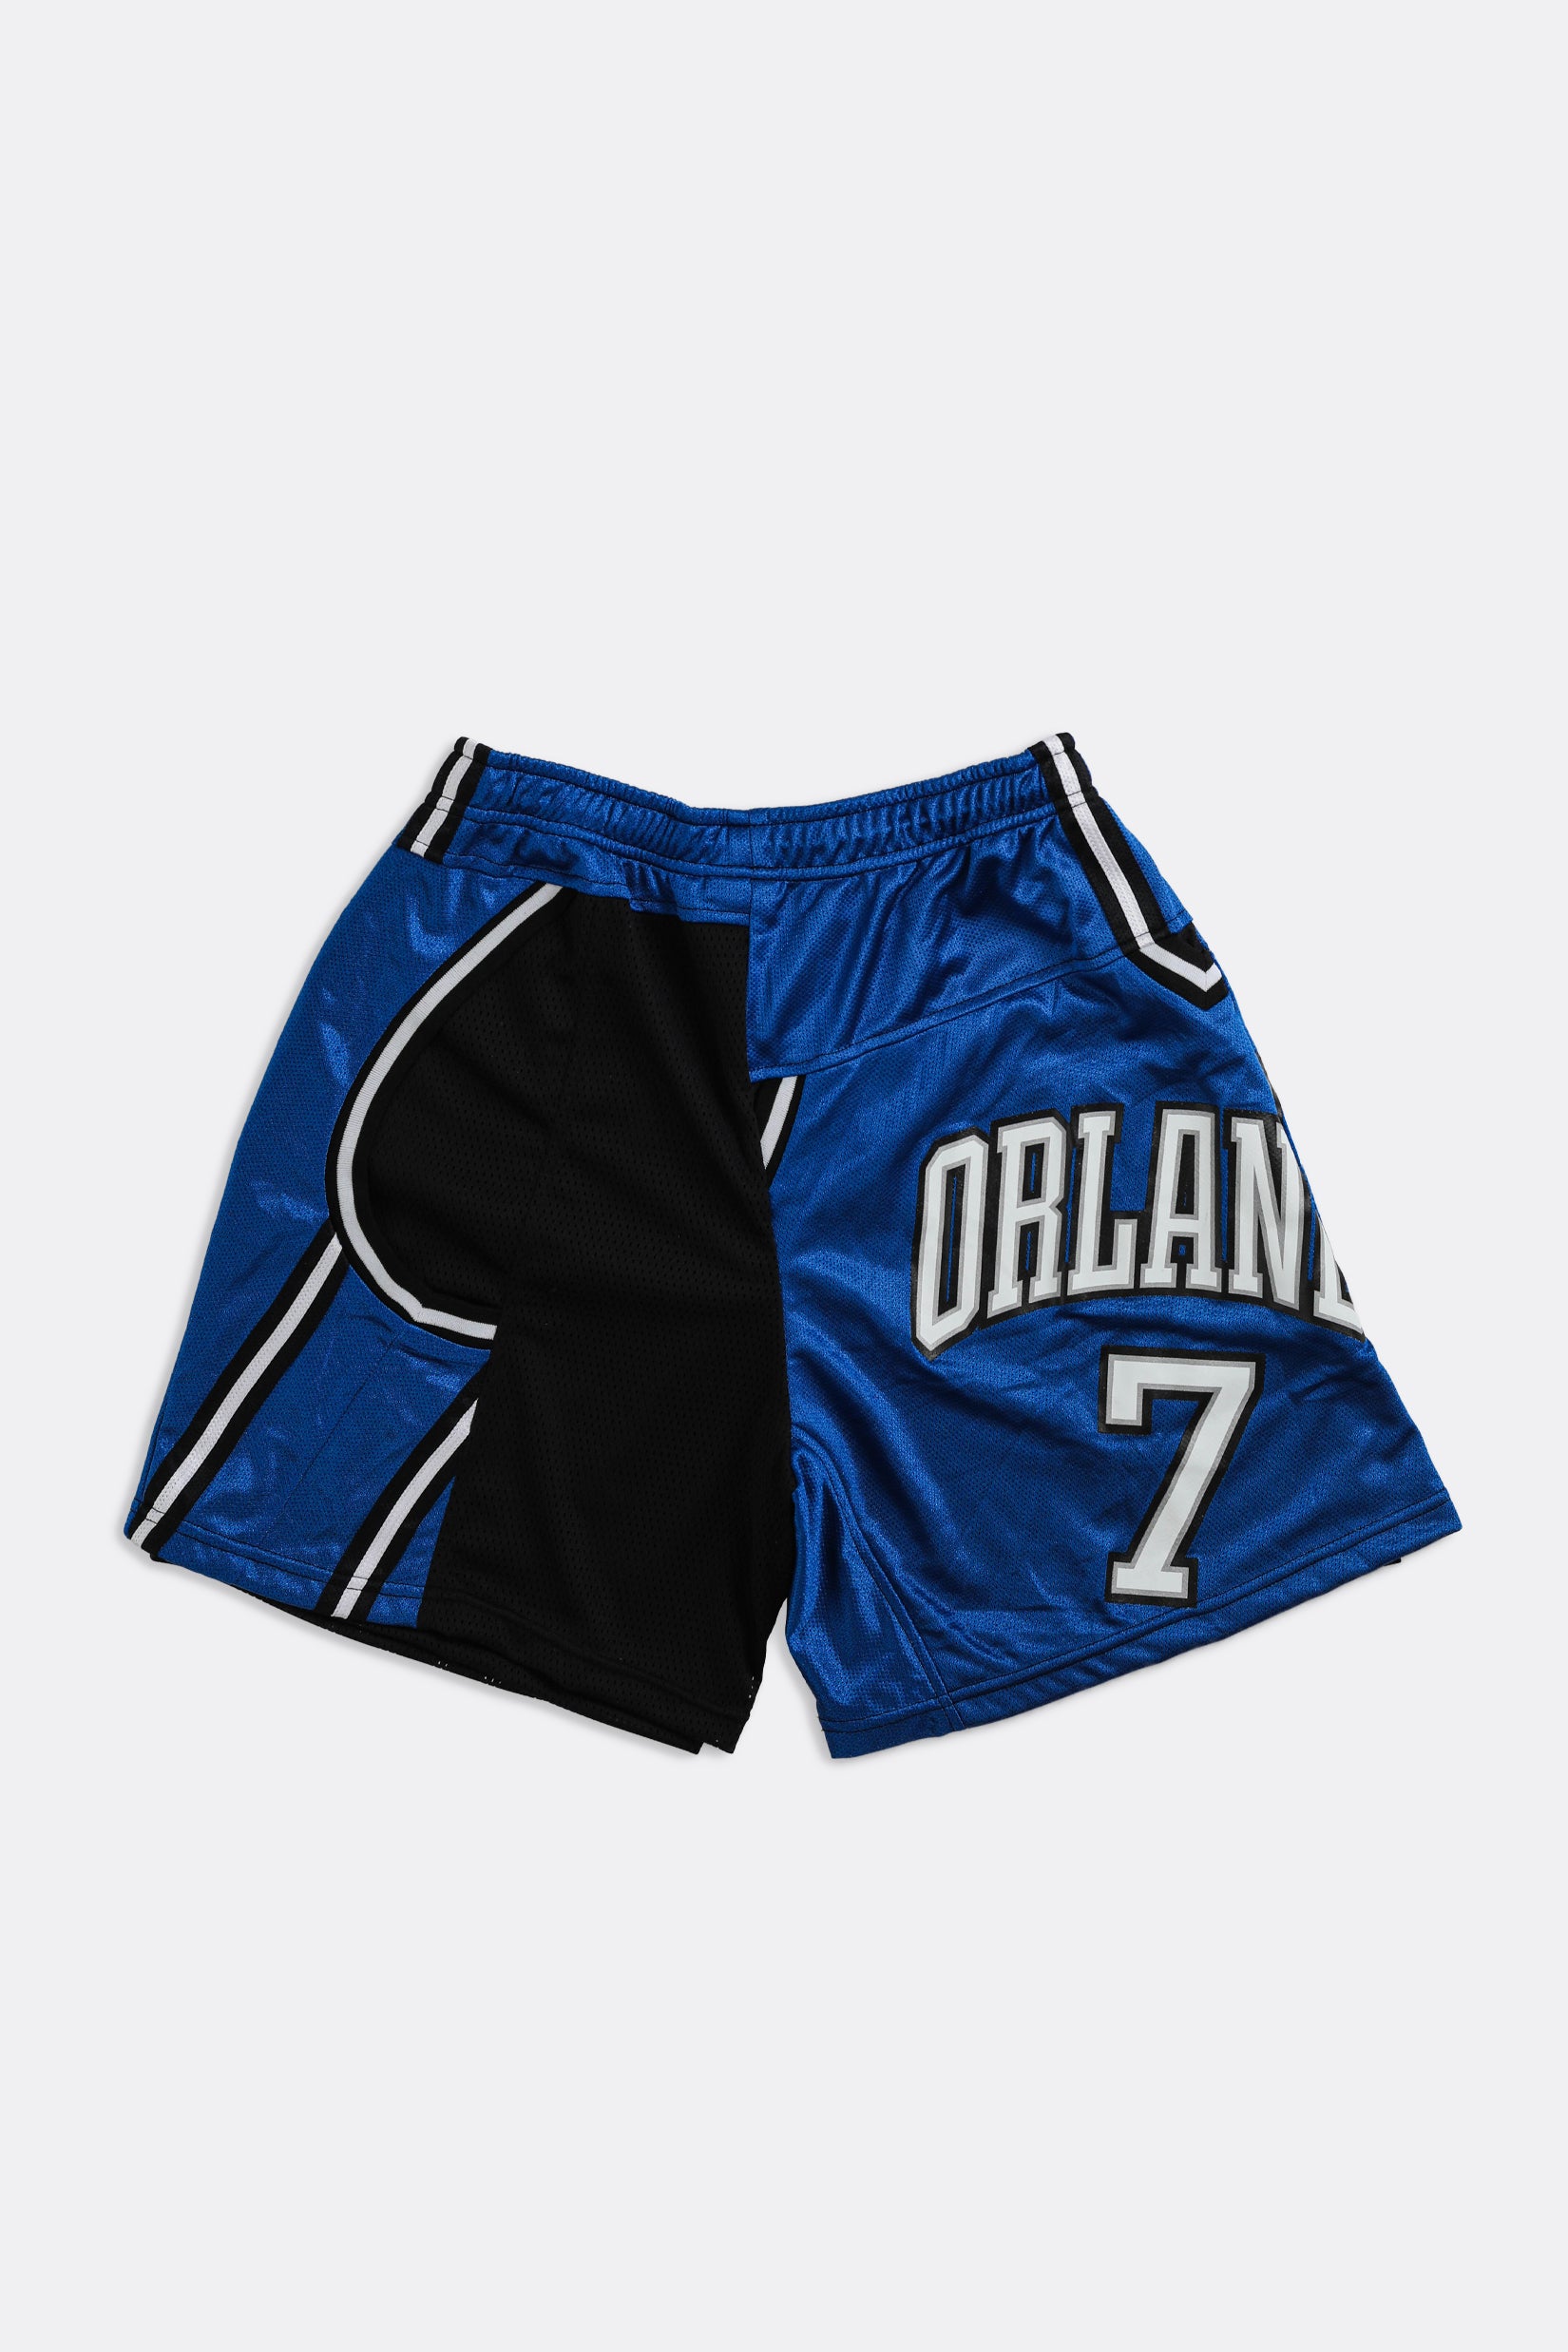 White Orlando Magic NBA Shorts for sale